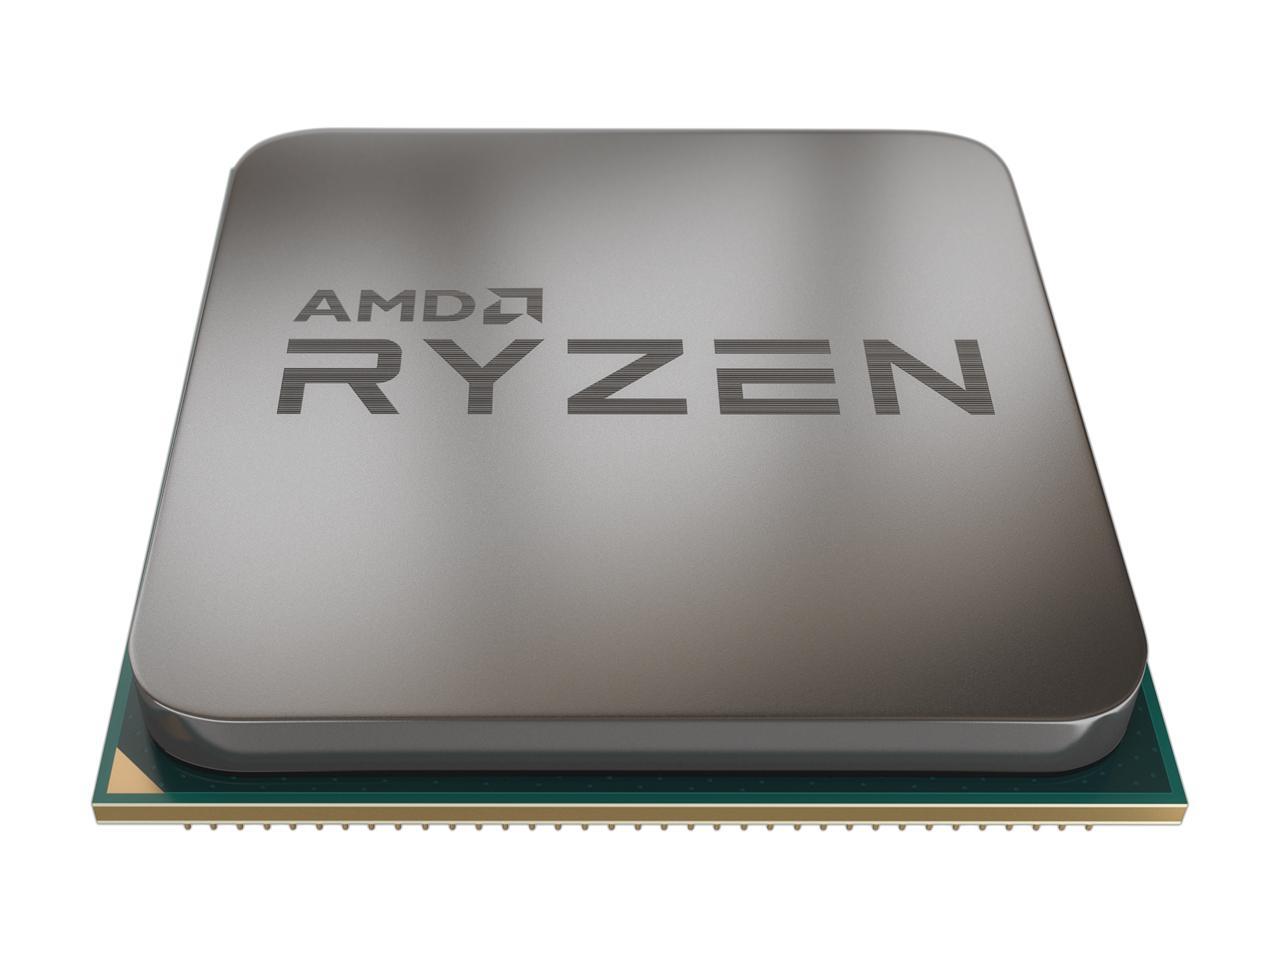 AMD RYZEN 7 3700X 8-Core 3.6 GHz Desktop CPU Processor 